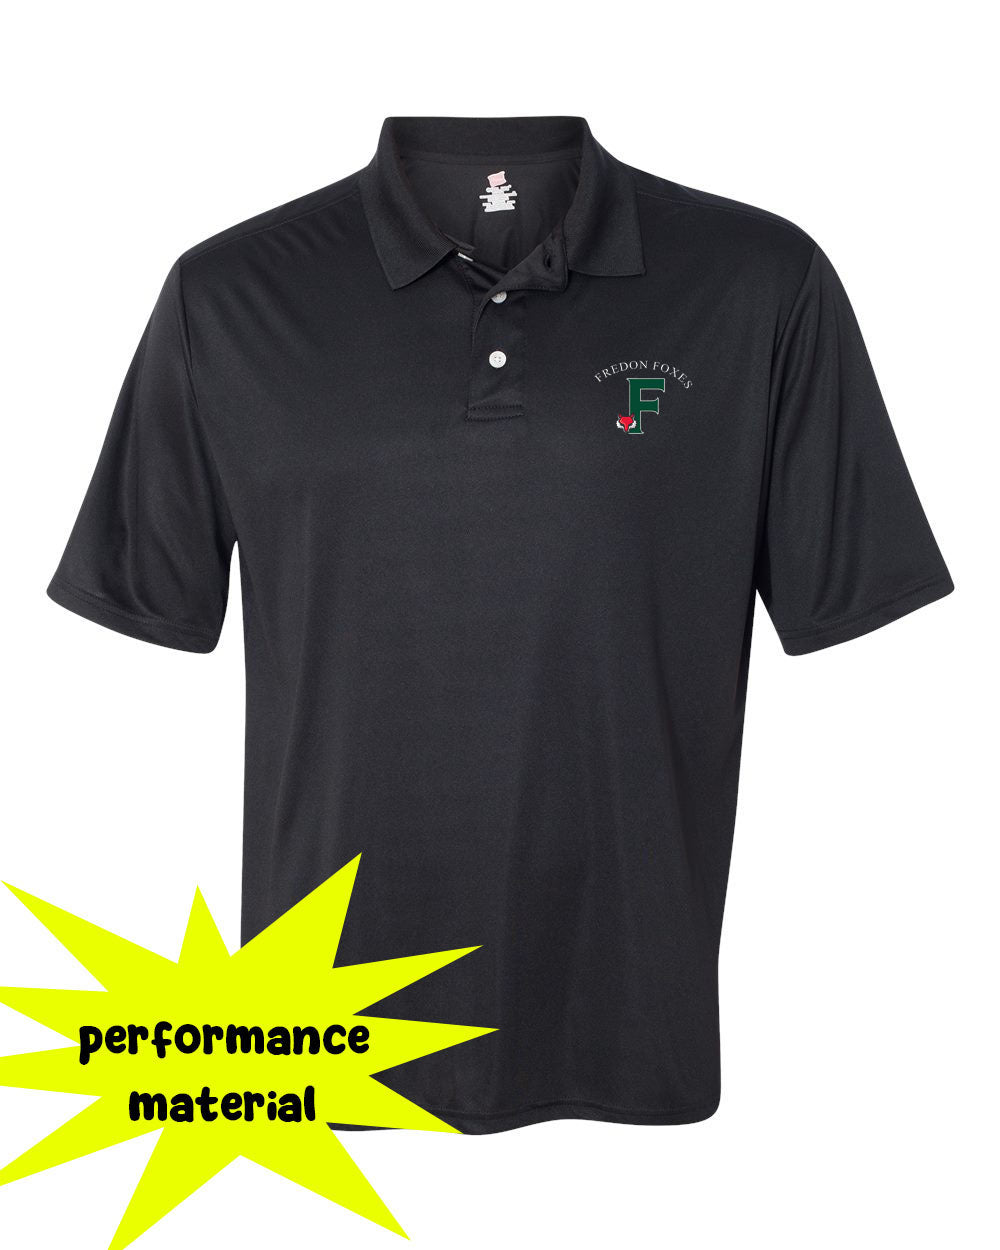 Fredon Design 9 Performance Material Polo T-Shirt